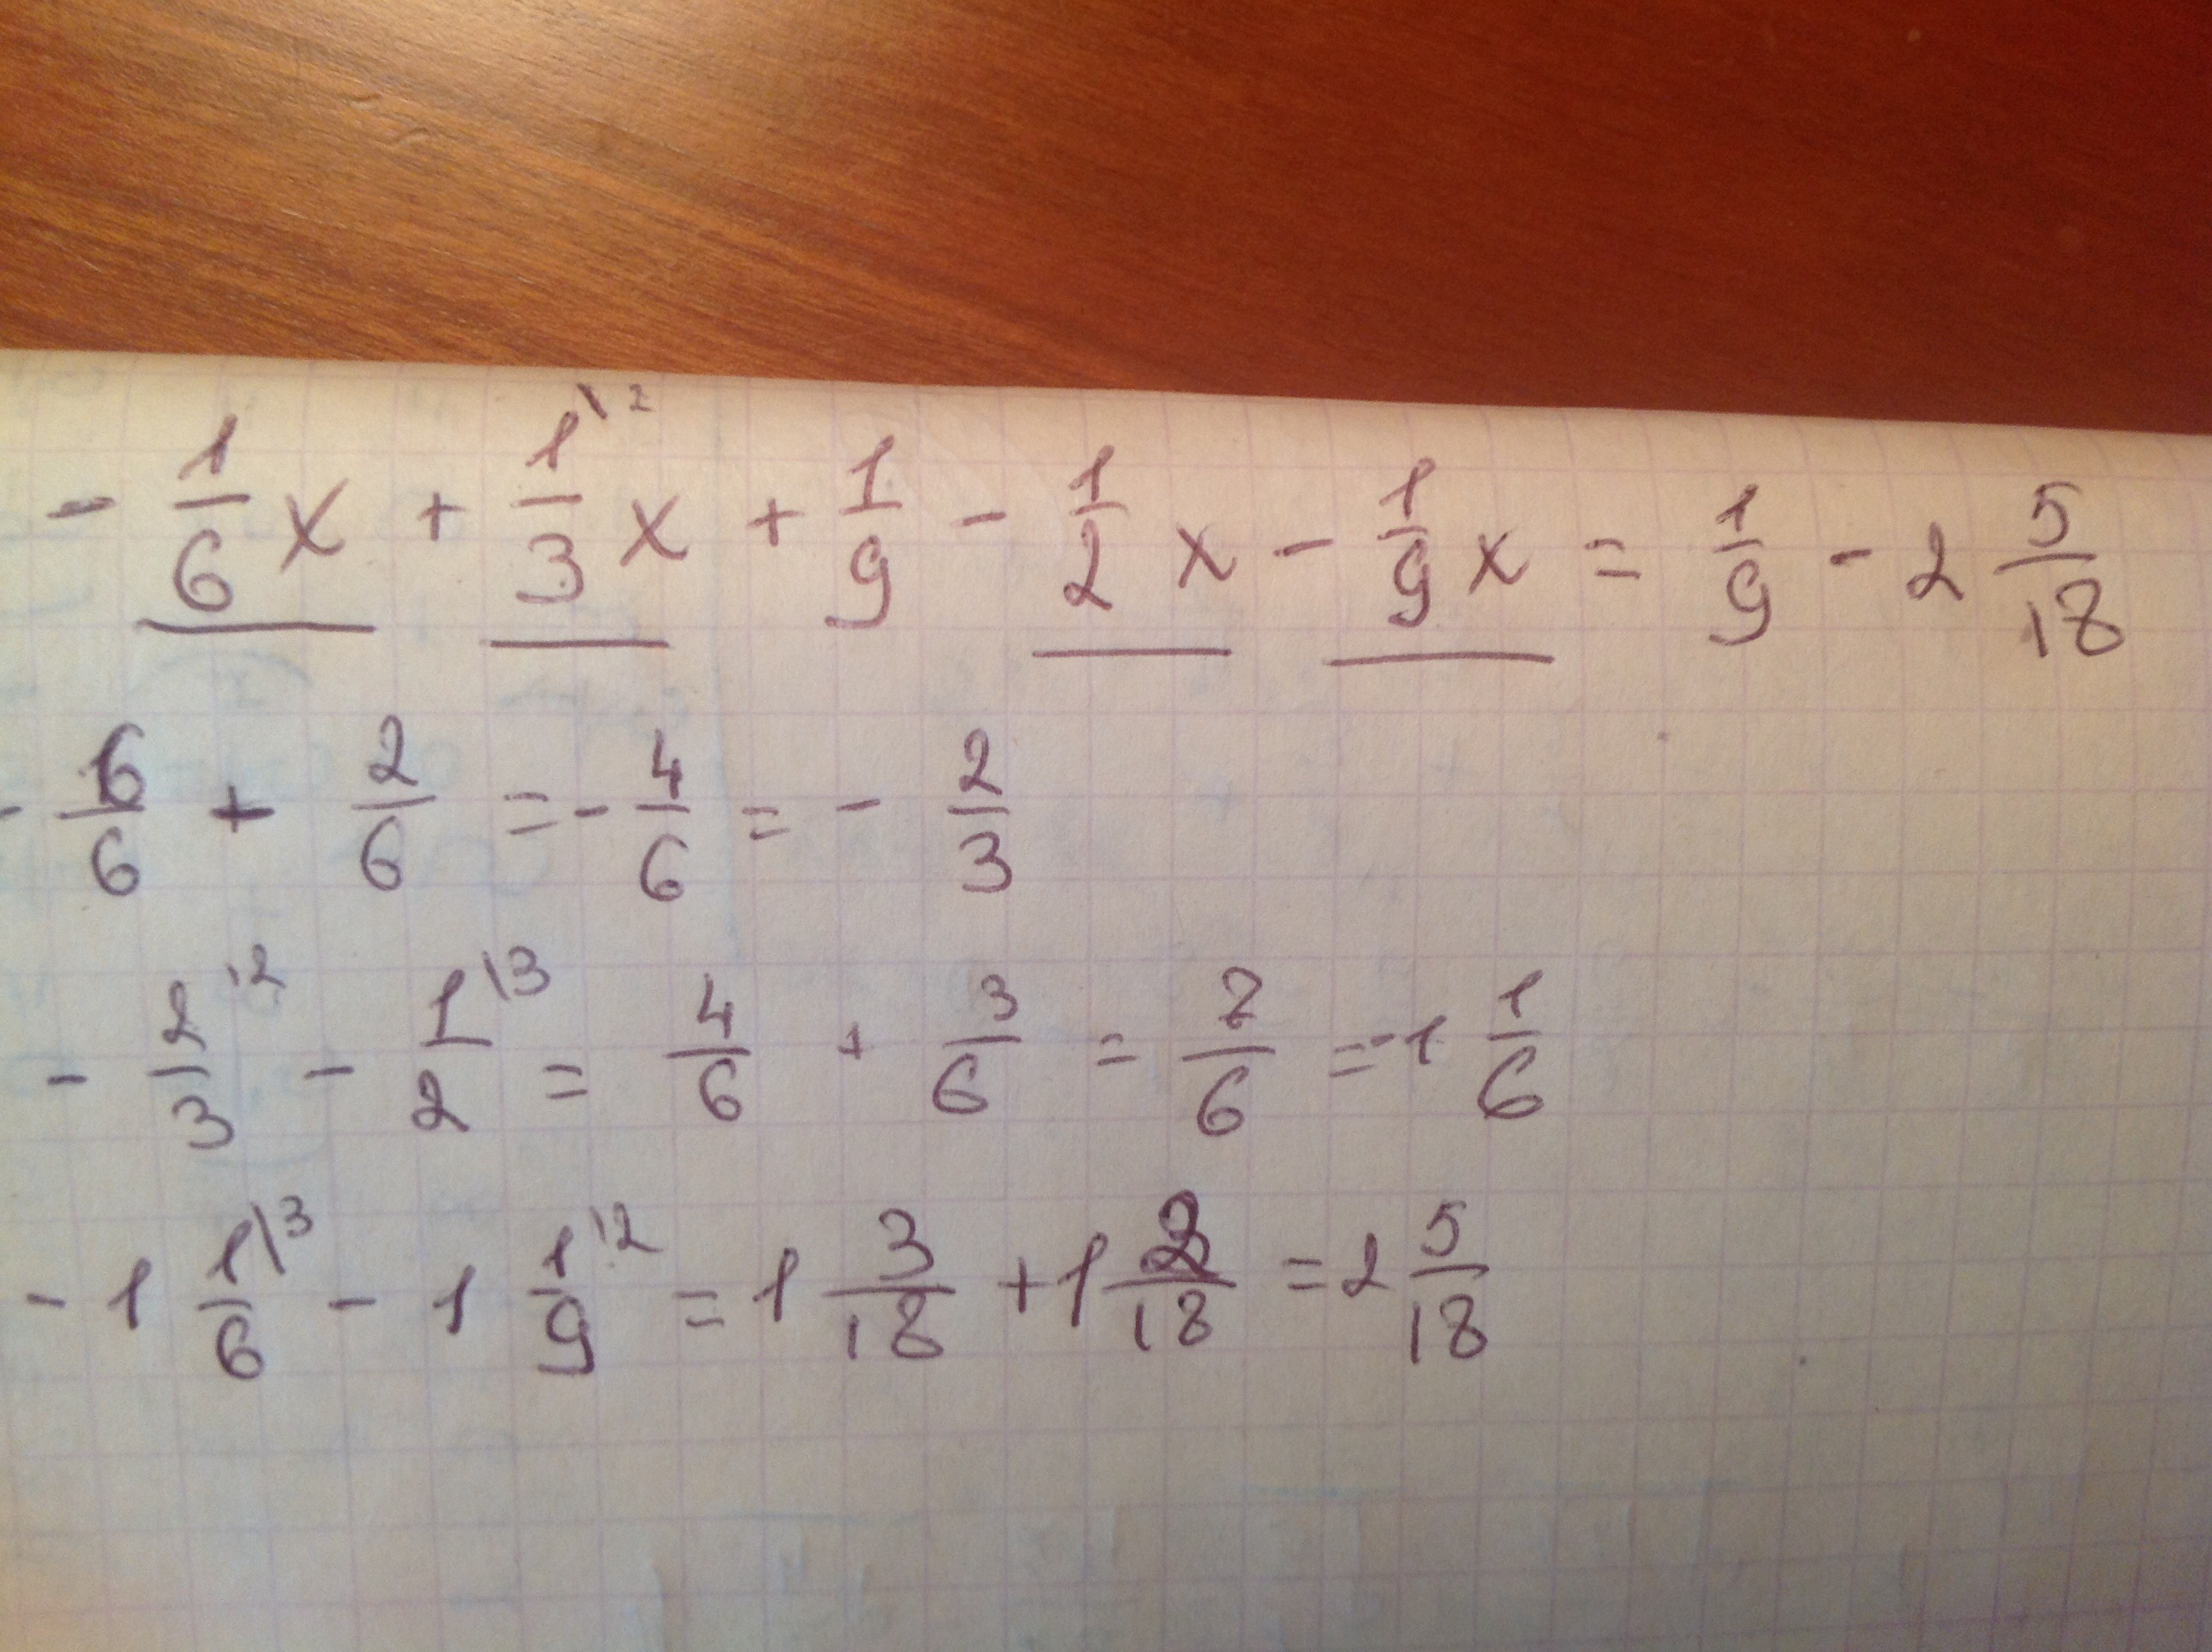 3 x 7 2x 9 13. Приведите подобное слагаемое 9-4x x-3. Привести подобные слагаемые (1,2x-3)-(8+3,7x). Приведите подобные слагаемые 4x-6x-2x+12-11. Приведите подобные 3x+2x+6x.